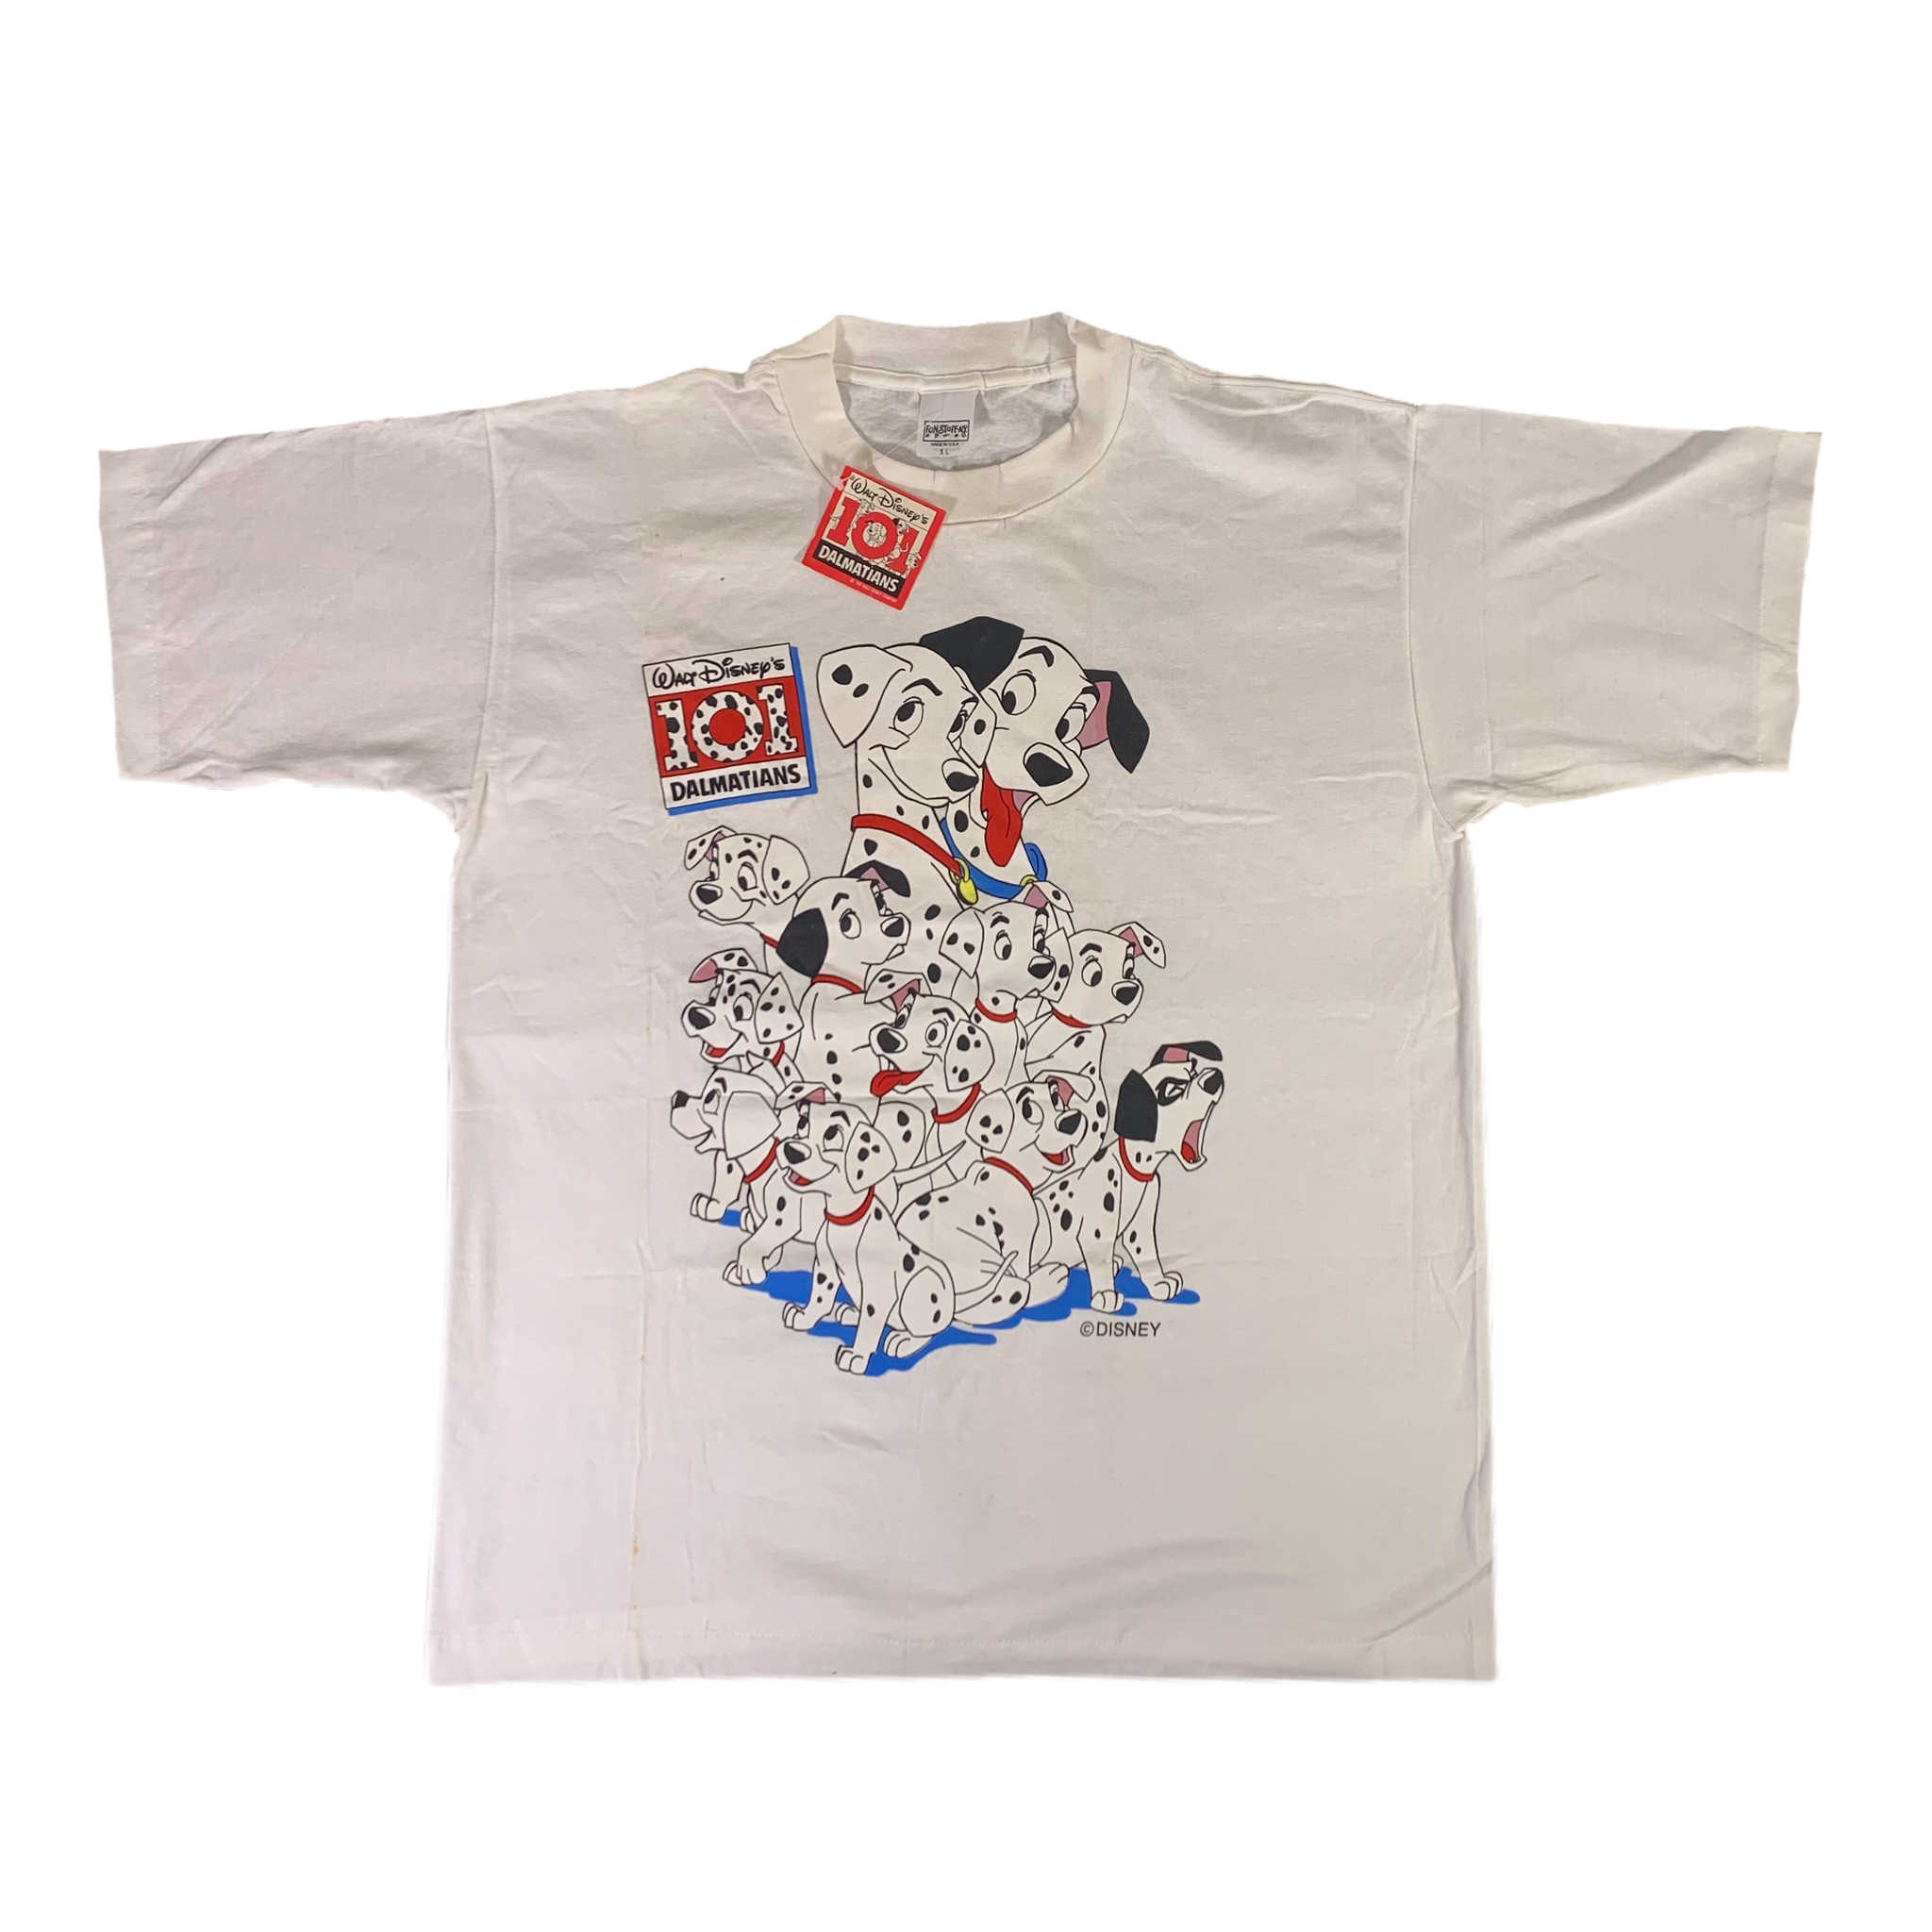 101 Dalmatians Shirt, Dalmatians Dog Shirt, Disney Shirt, Walt Disney World Shirt, Dalmatians Shirt, Disney Tshirt White XL Sweatshirt | Roman T Shir